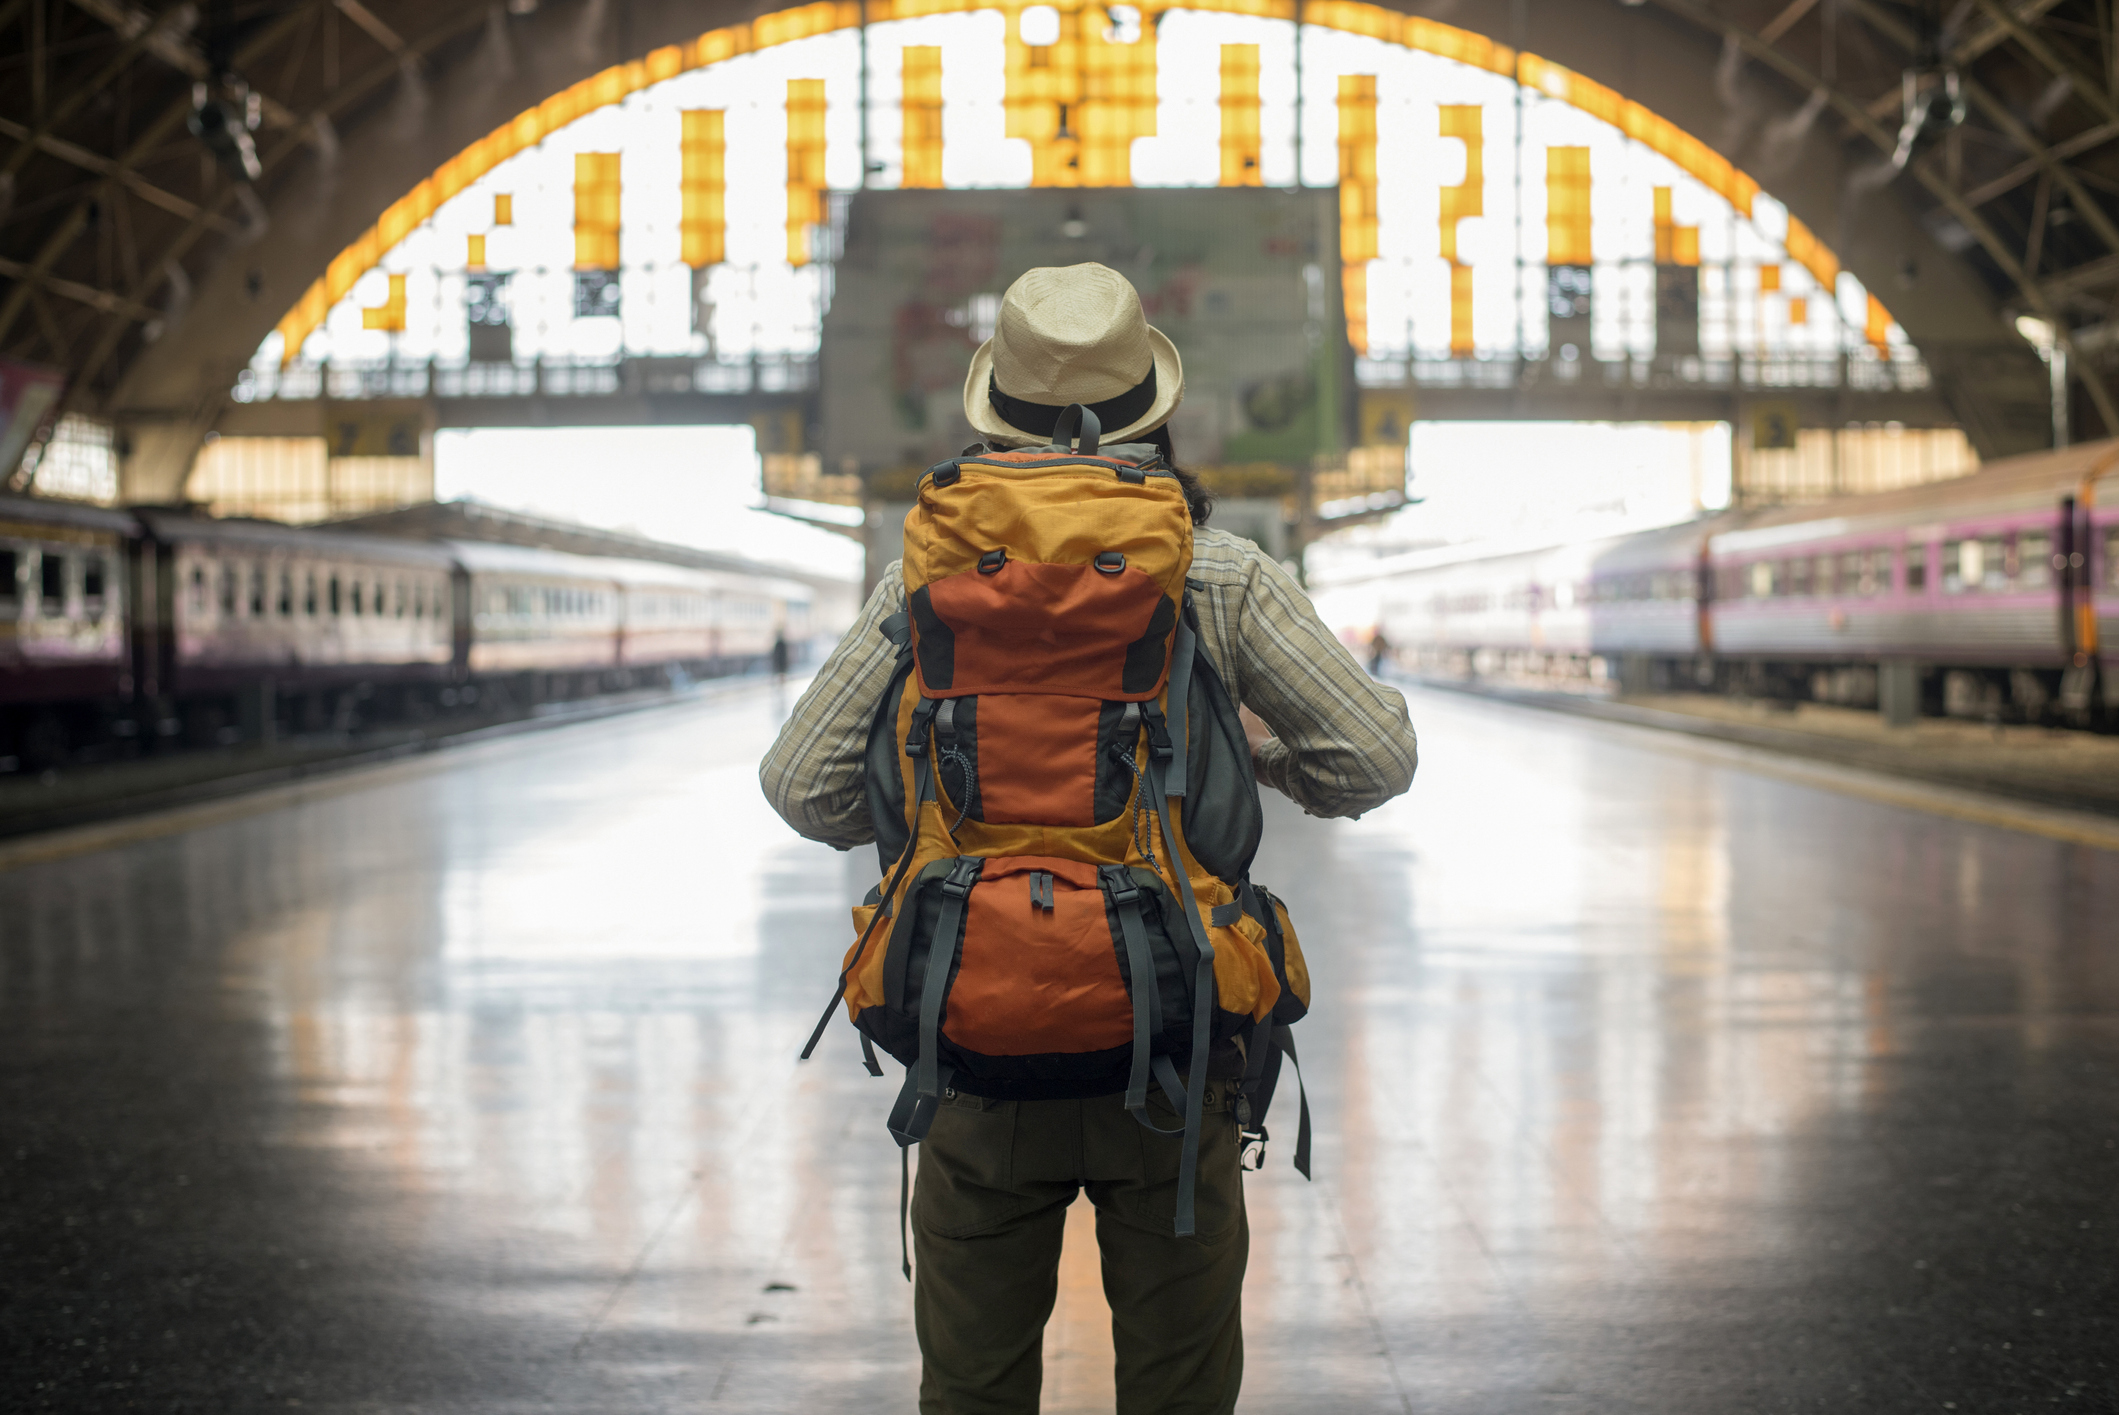 traveler man waits train on railway platform.